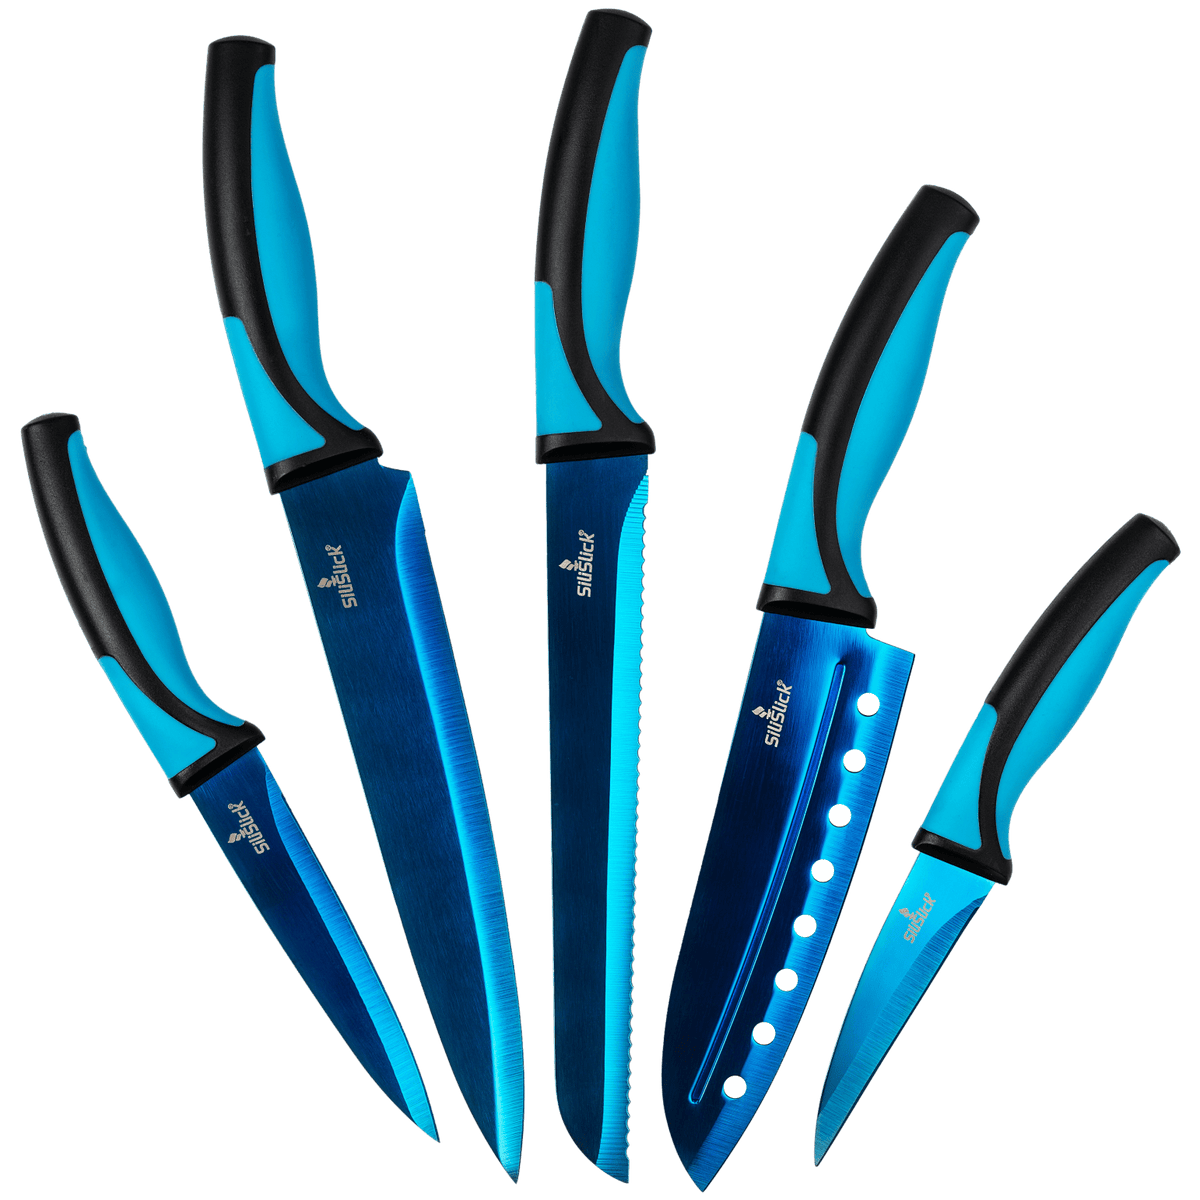 SiliSlick Kitchen Knife Set , 5 Chef Knives , Titanium Coated Iridescent  Stainless Steel Rainbow Blades & Ergonomic Hand